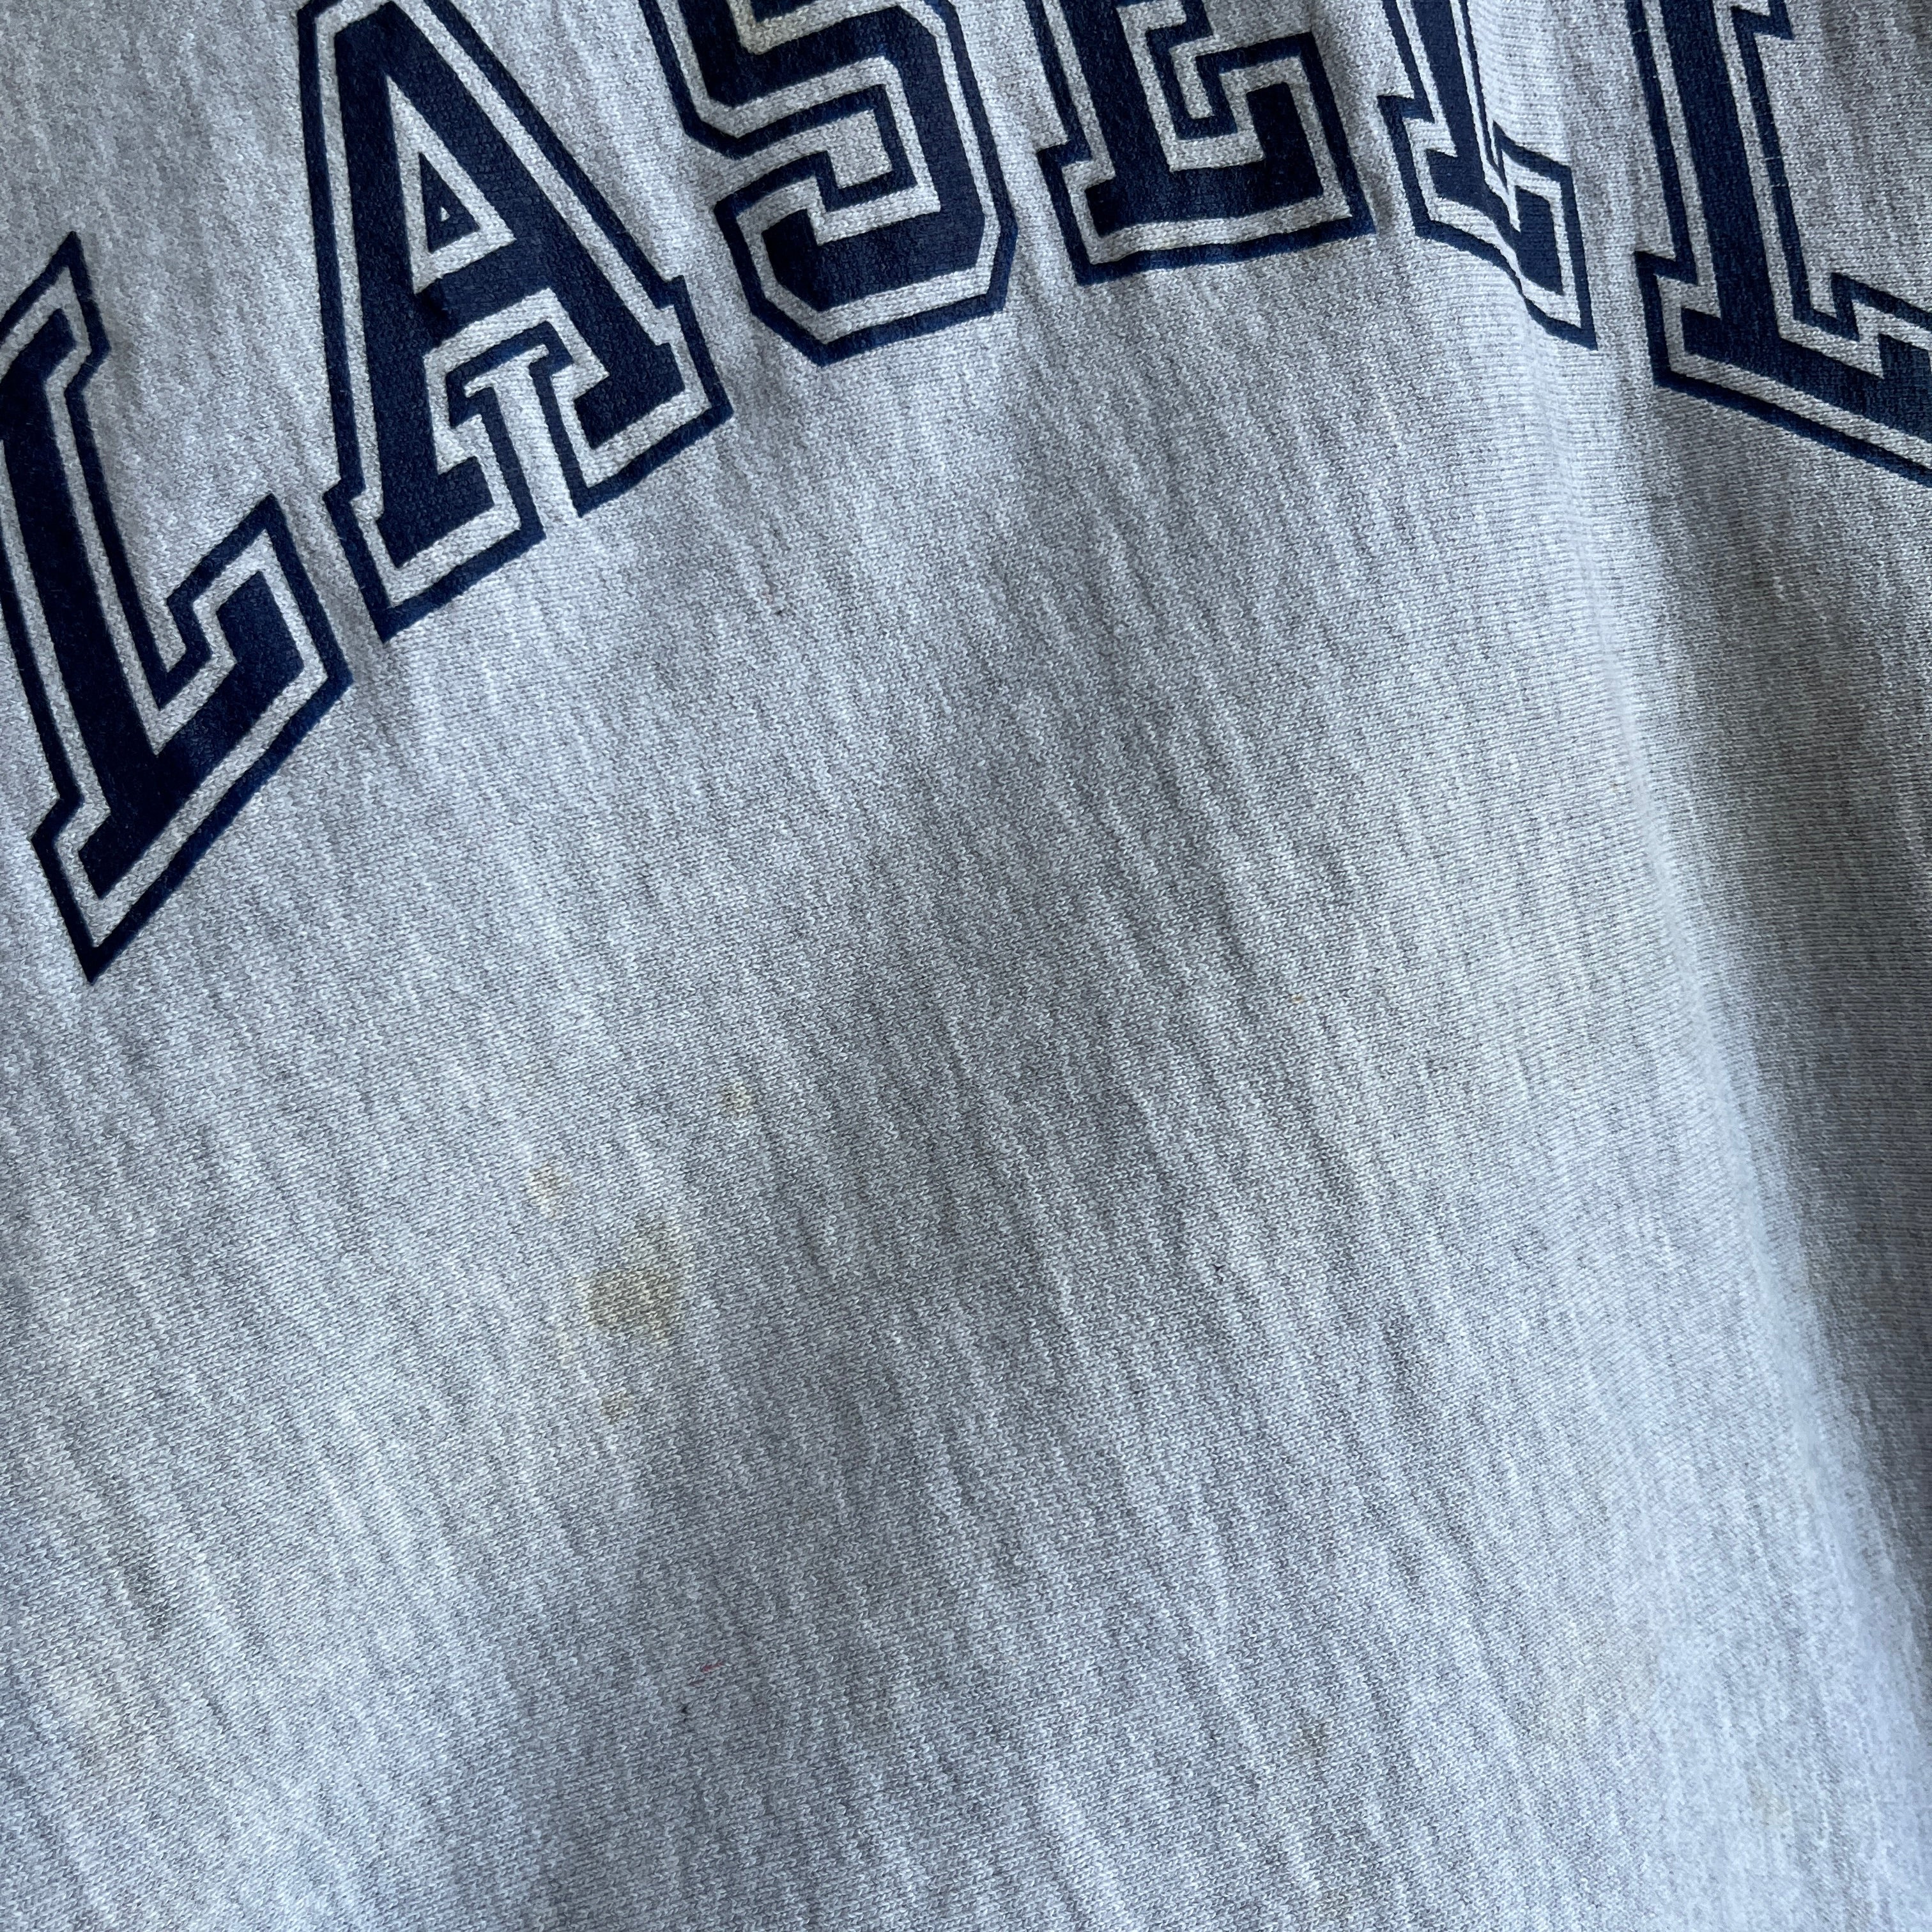 1980/90s Lasell Reverse Weave USA Made Champion Nicely Worn Heavyweight Sweatshirt